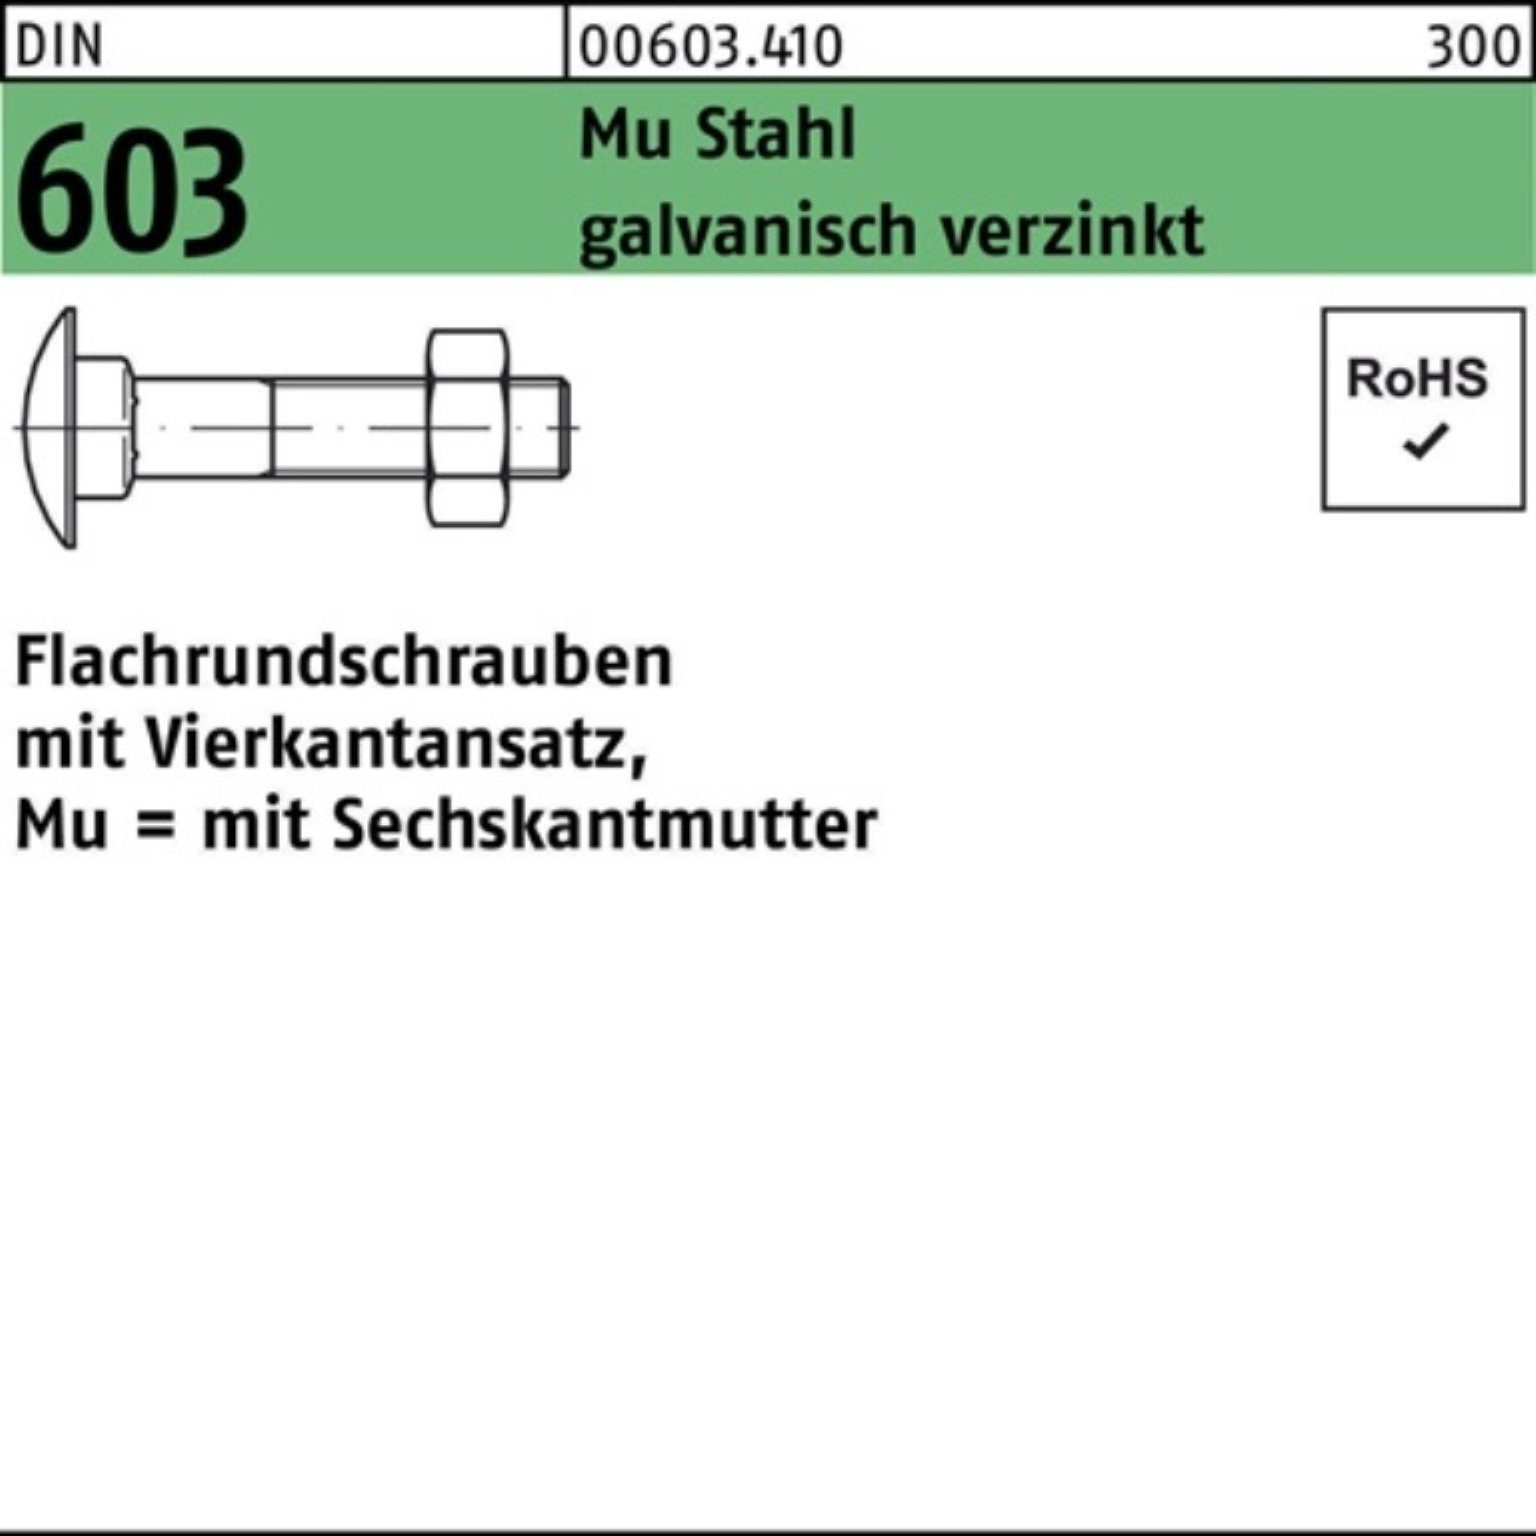 Vierkantansatz/6-ktmutter Reyher Schraube 603 Flachrundschraube DIN M8x200 Pack 100er